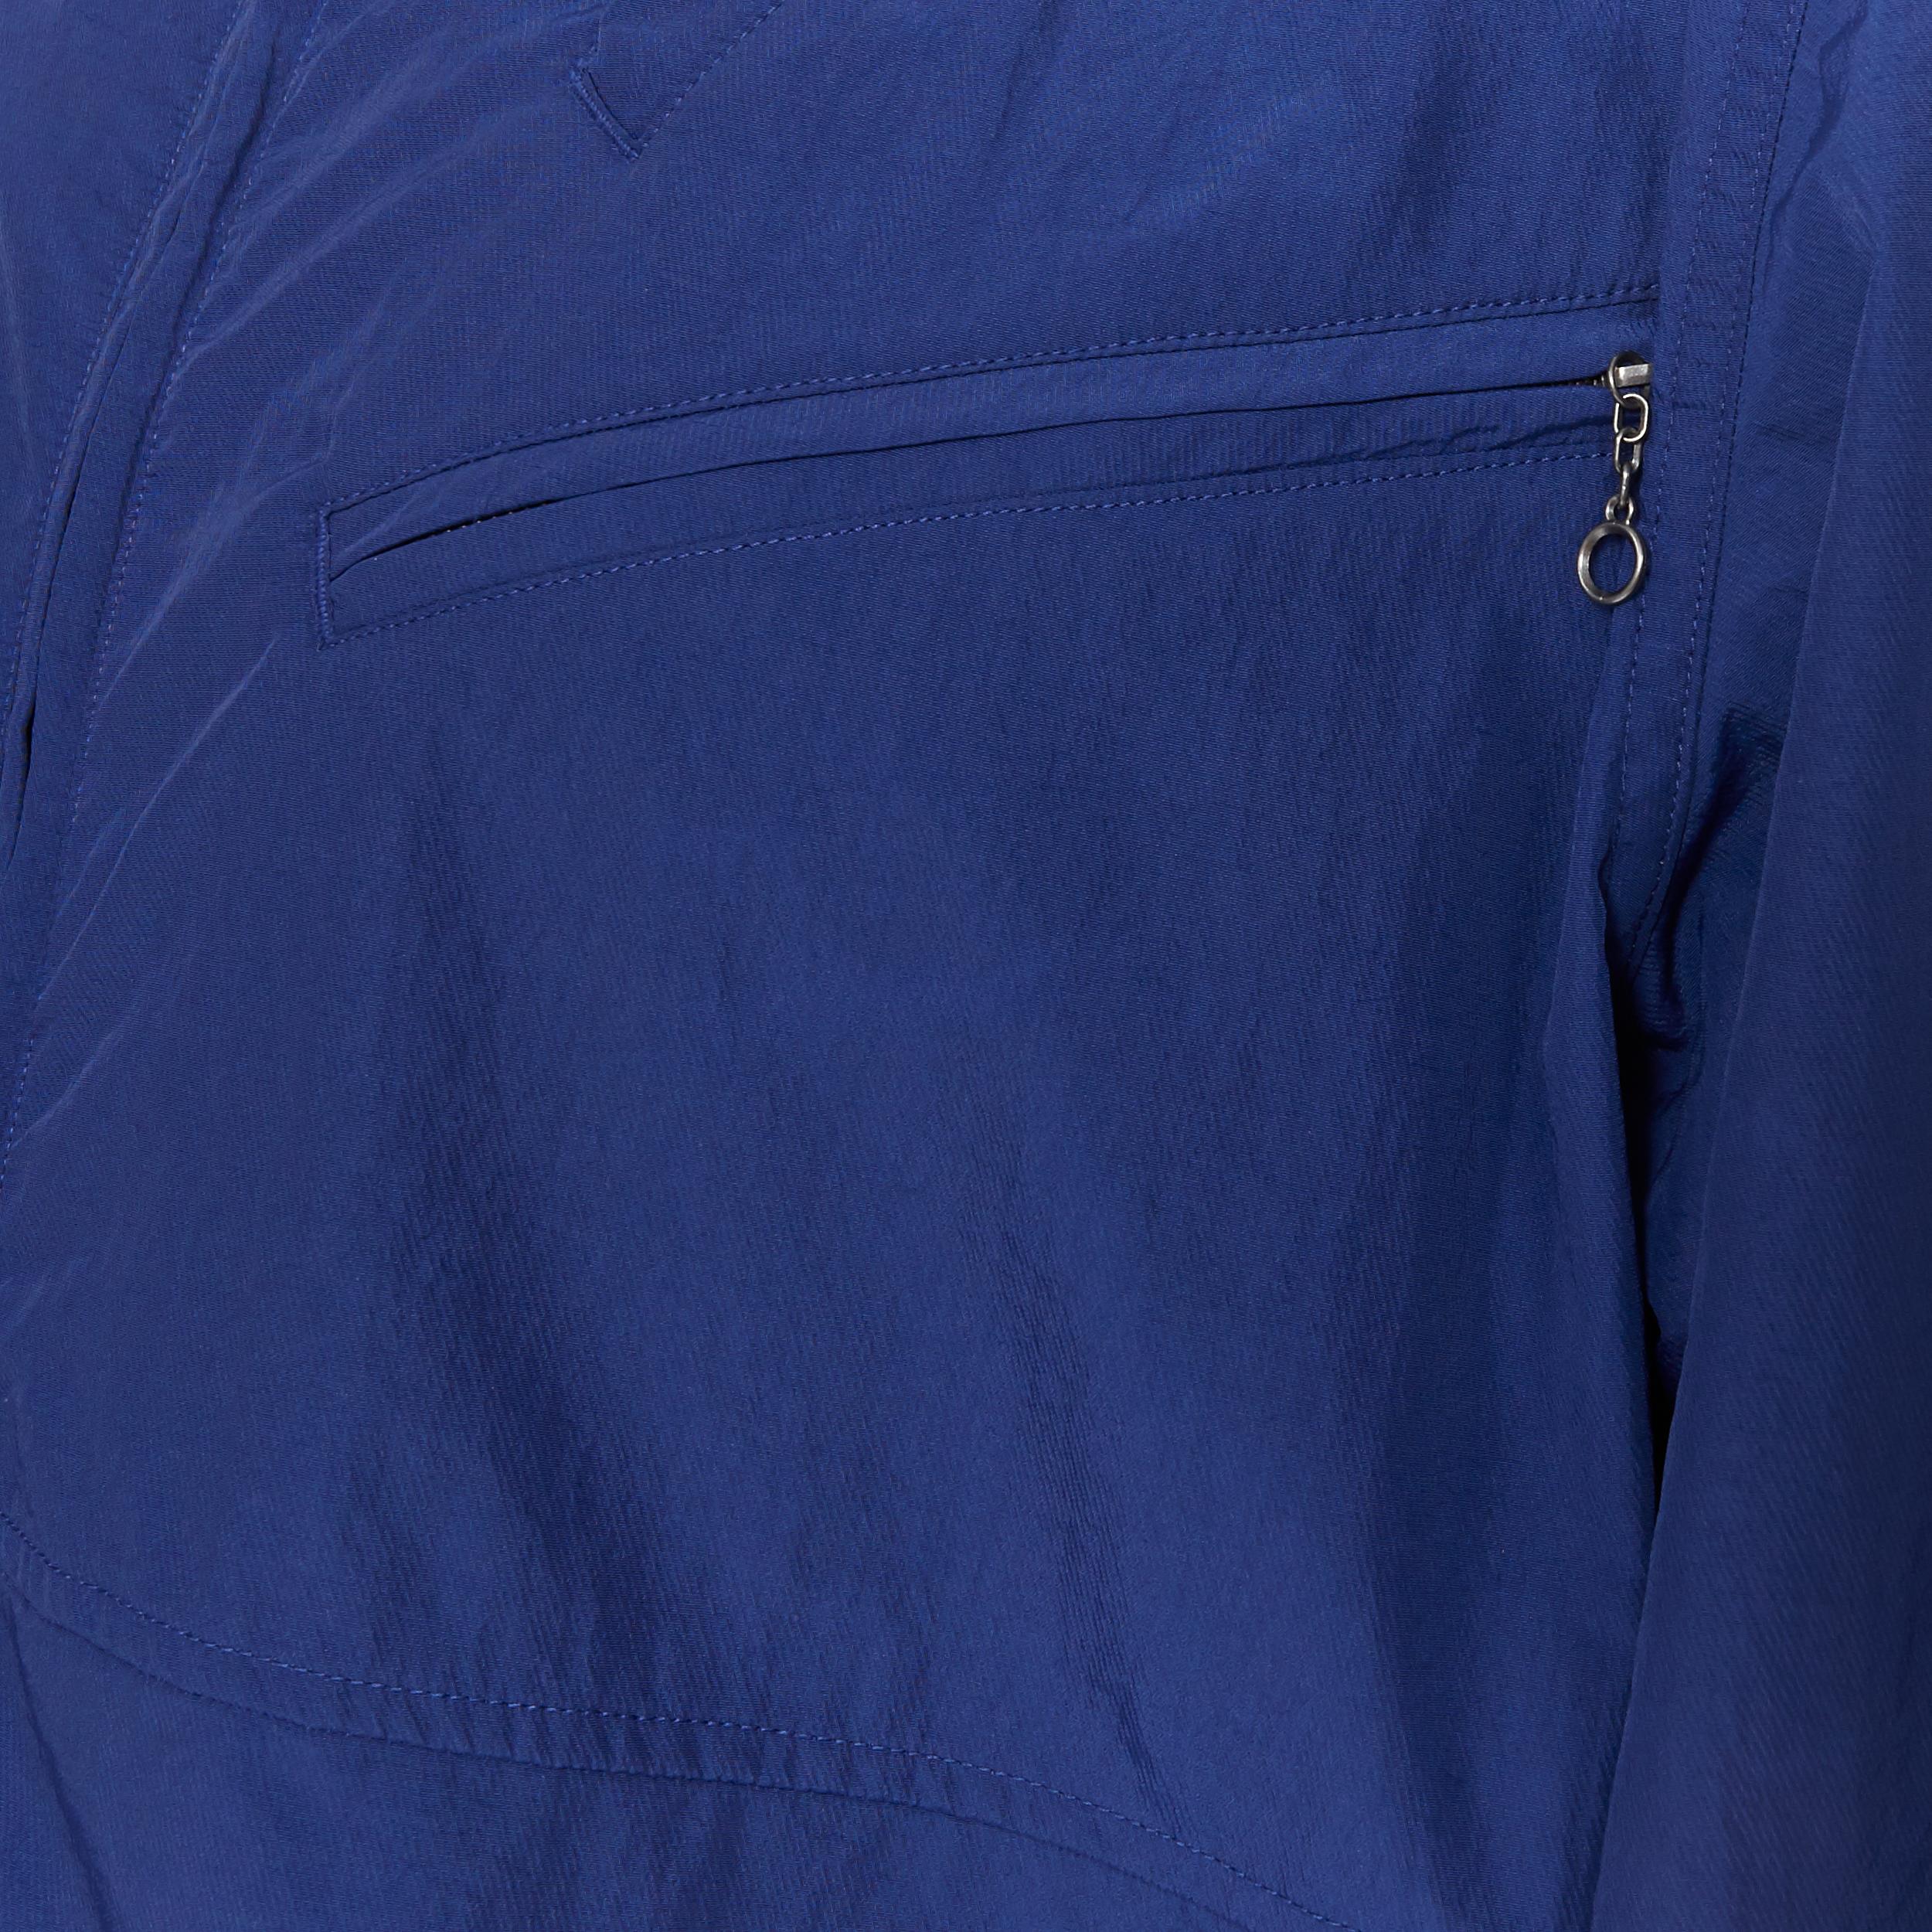 new THE NORTH FACE KAZUKI KARAISHI Flag Blue Charloe Service jacket L / XL 7